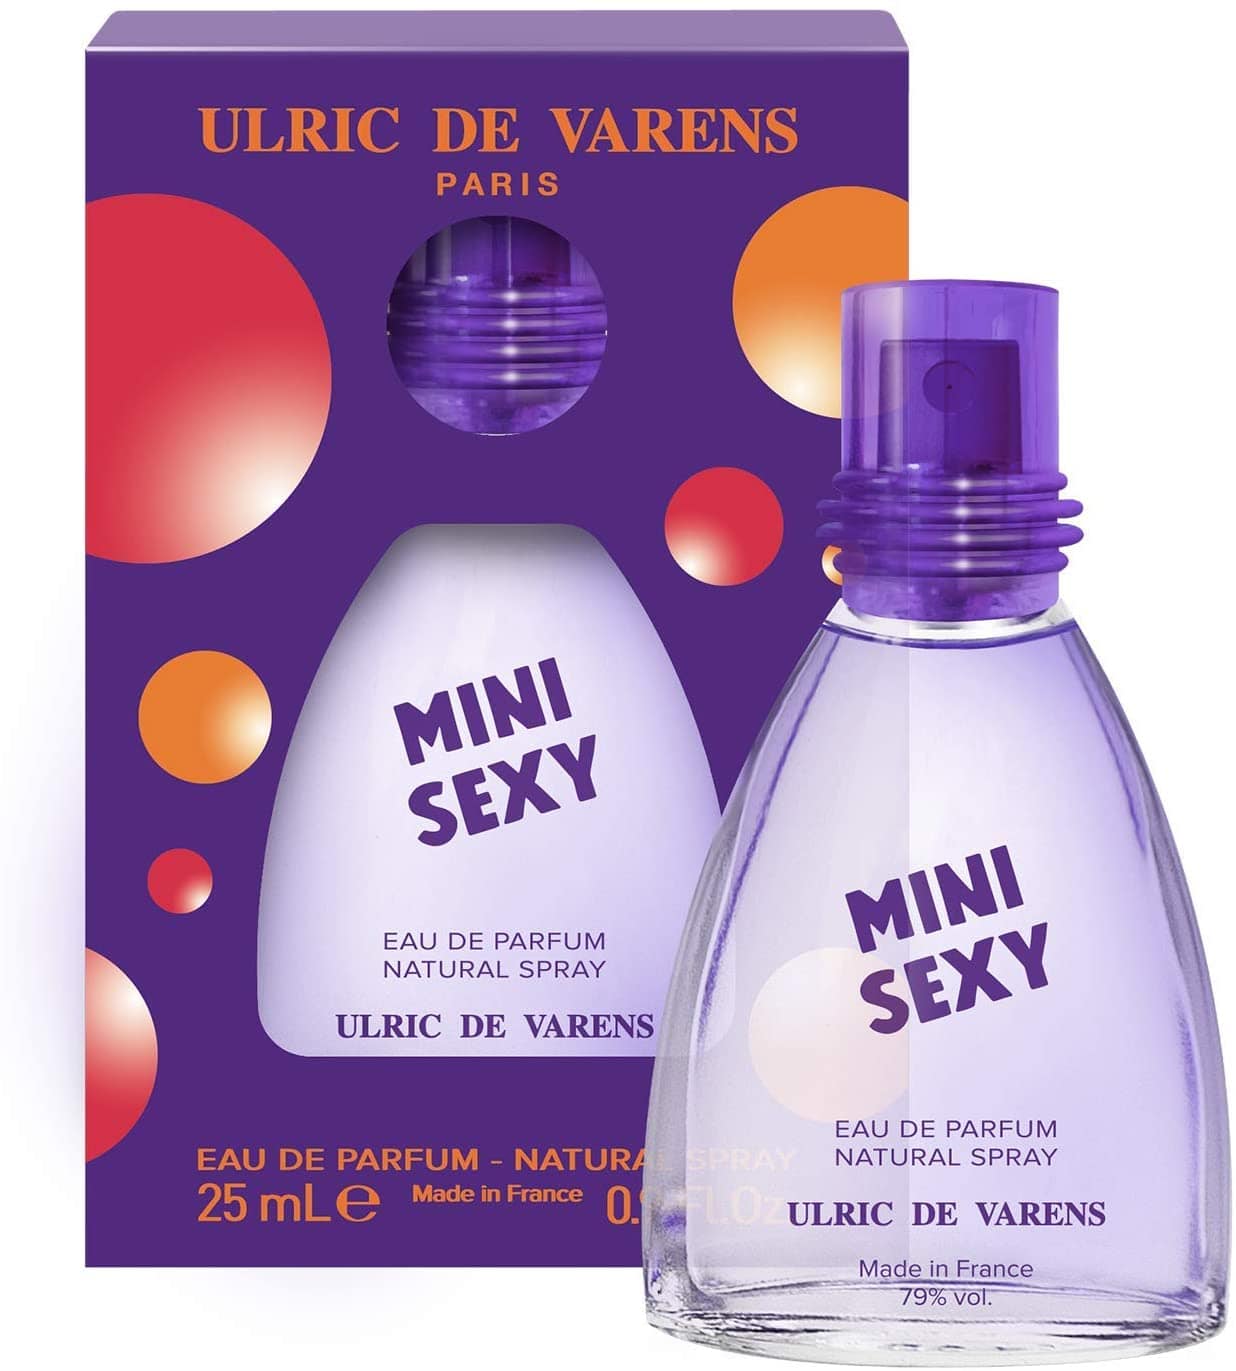 MINI SEXY  Eau de Parfum  Spray 25 ml  - UDV-5351